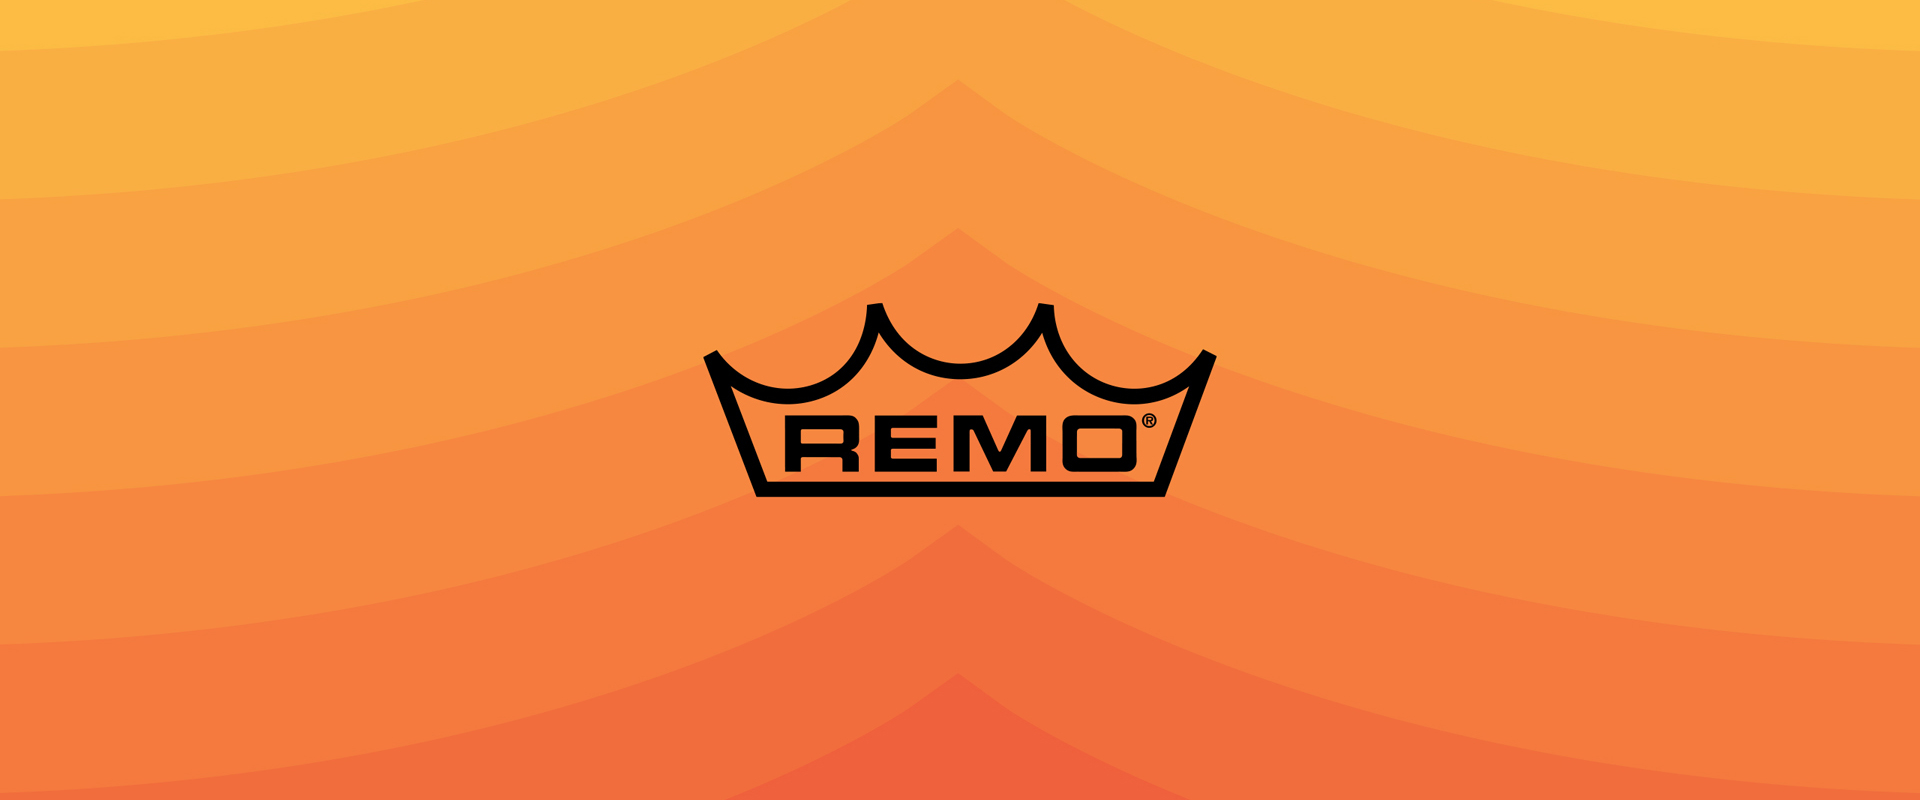 Remo Brand Logo Orange Wallpaper